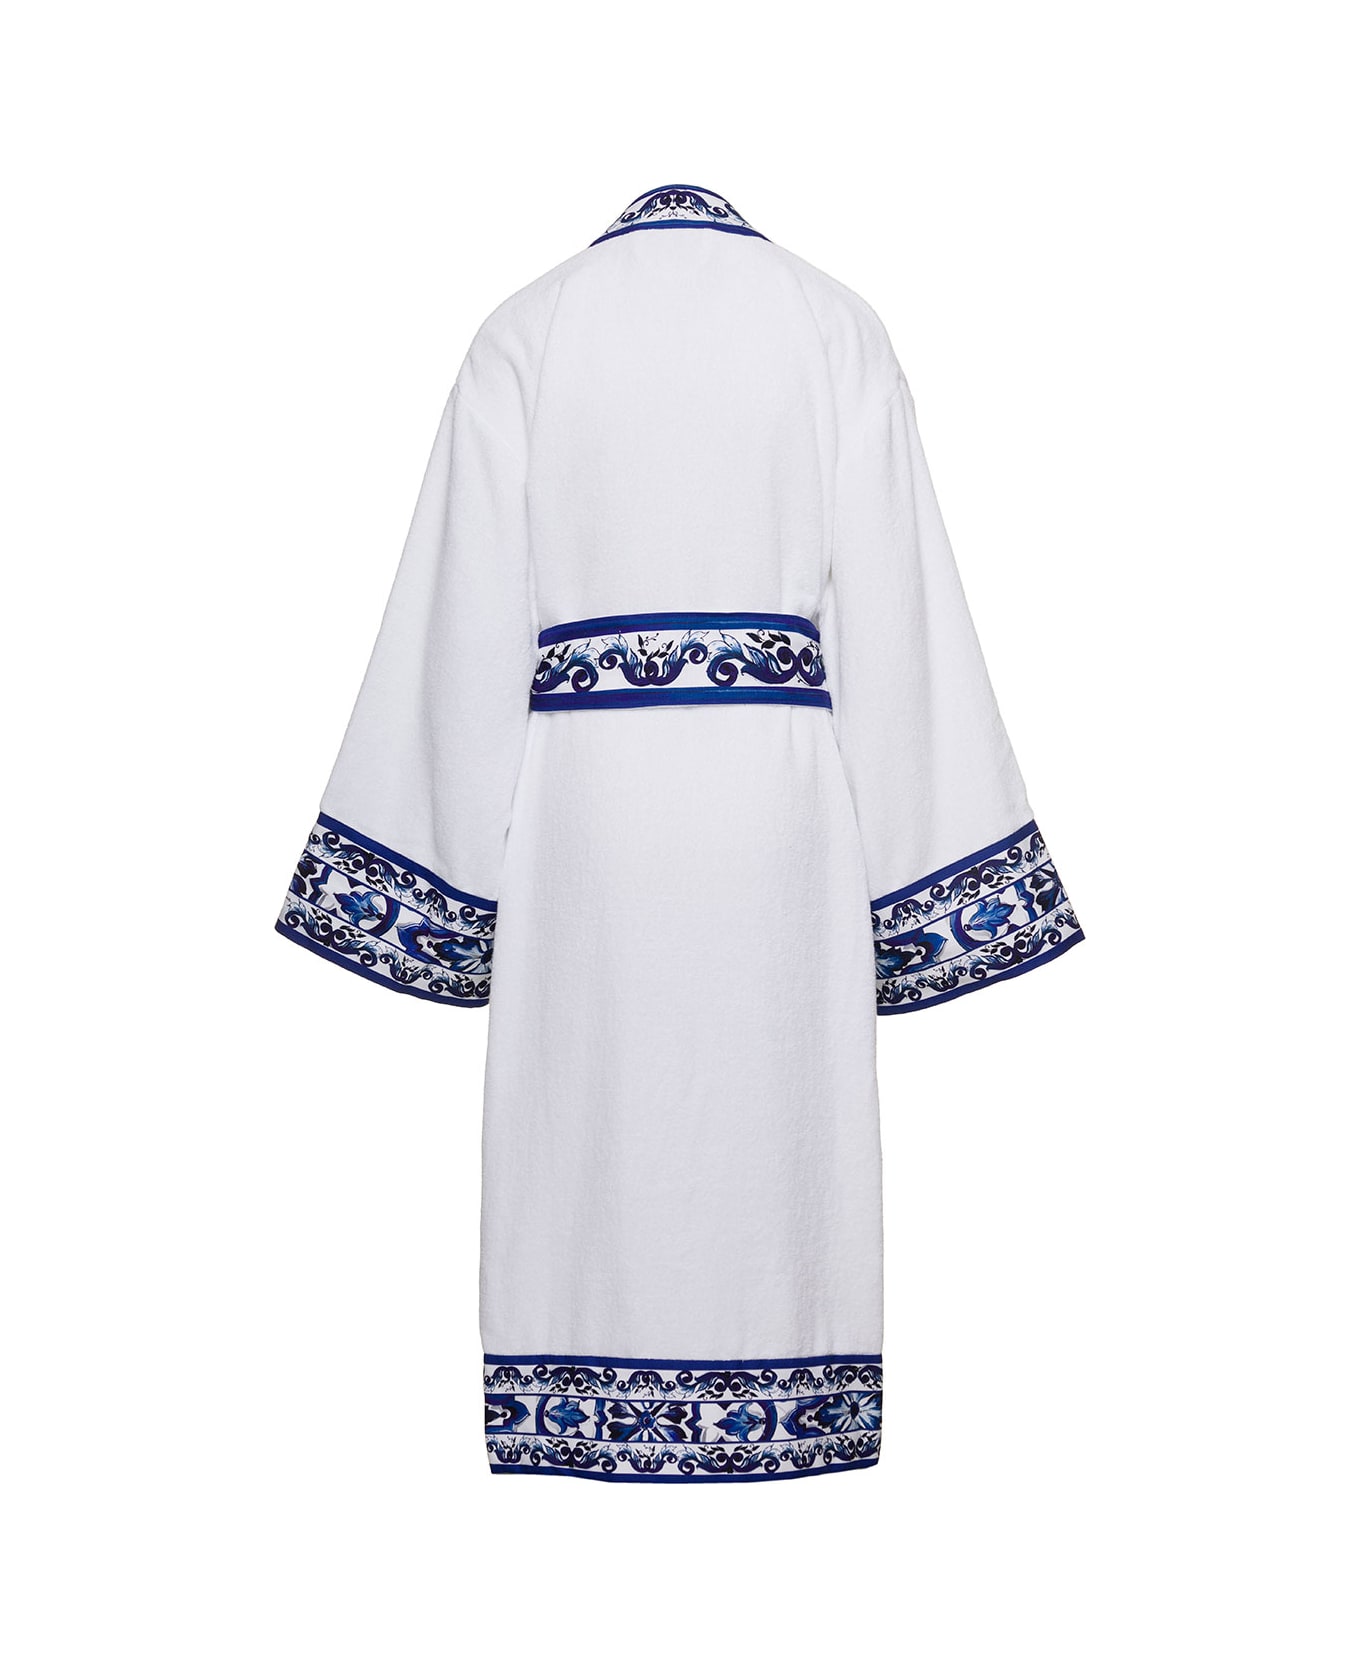 Dolce & Gabbana White Kimono Bathrobe With Blu Mediterraneo Trim In Cotton Dolce & Gabbana - White 水着